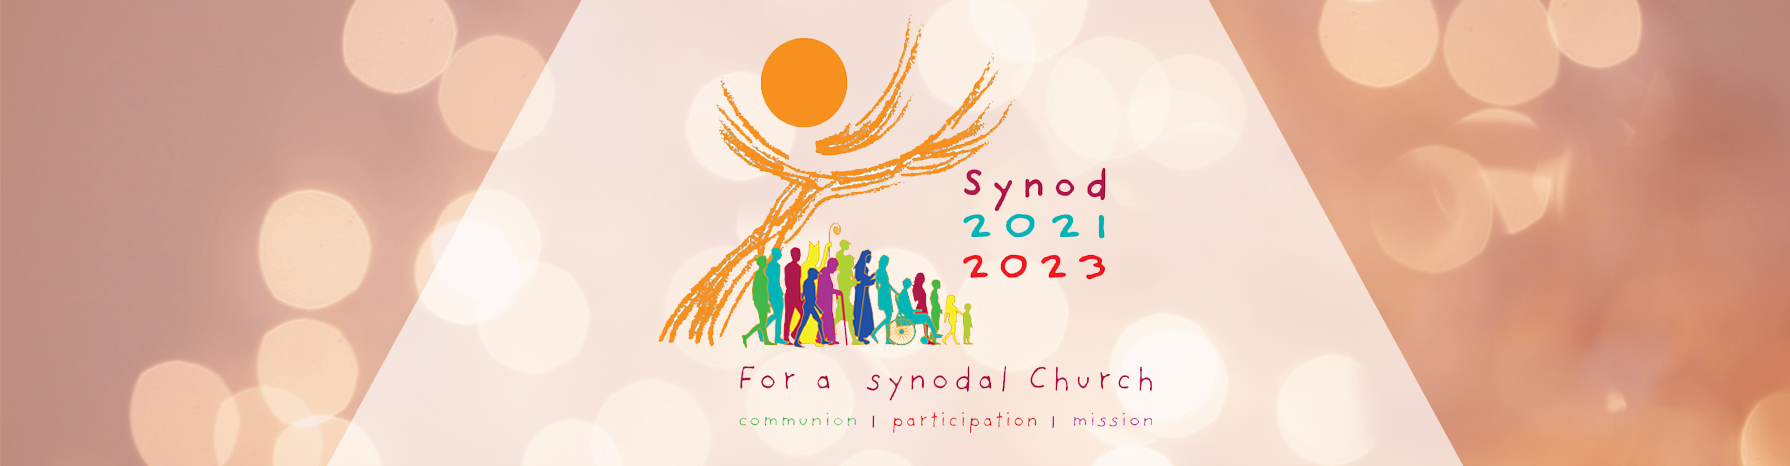 Synod-banner-20212023